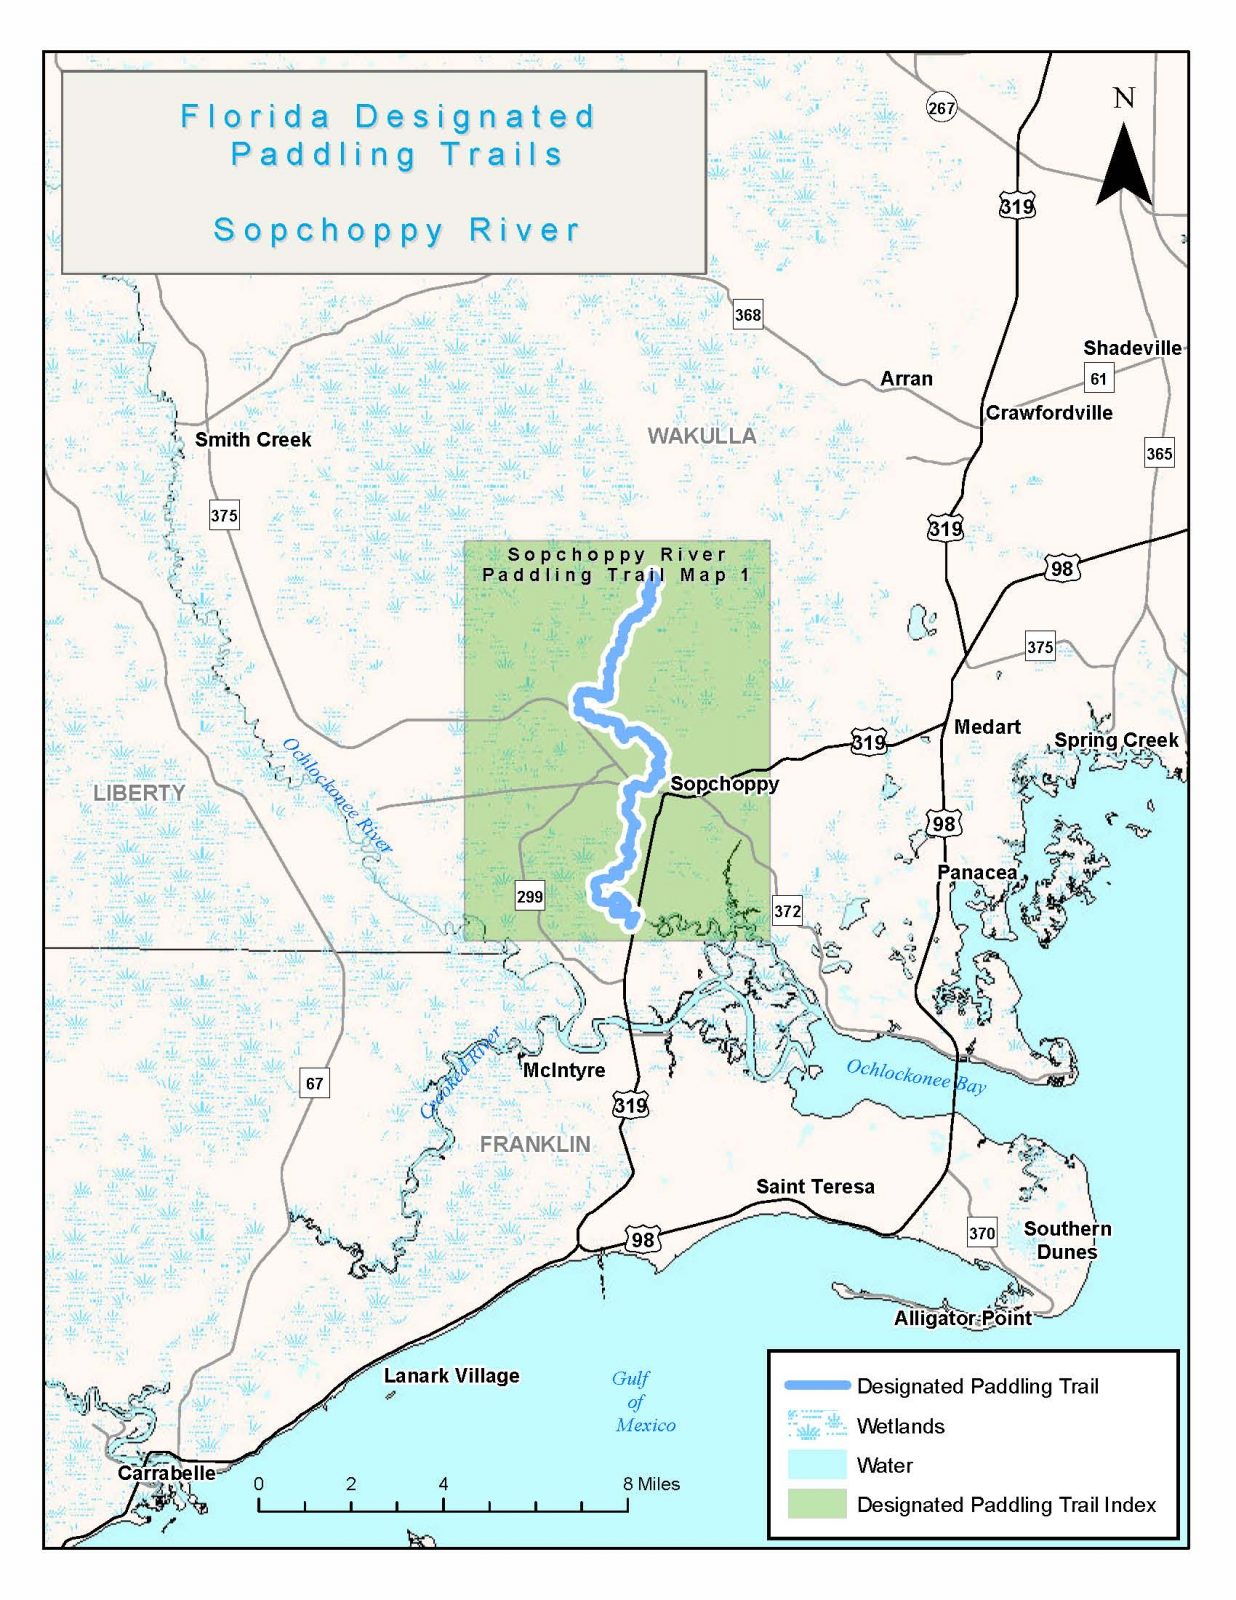 Sopchoppy River